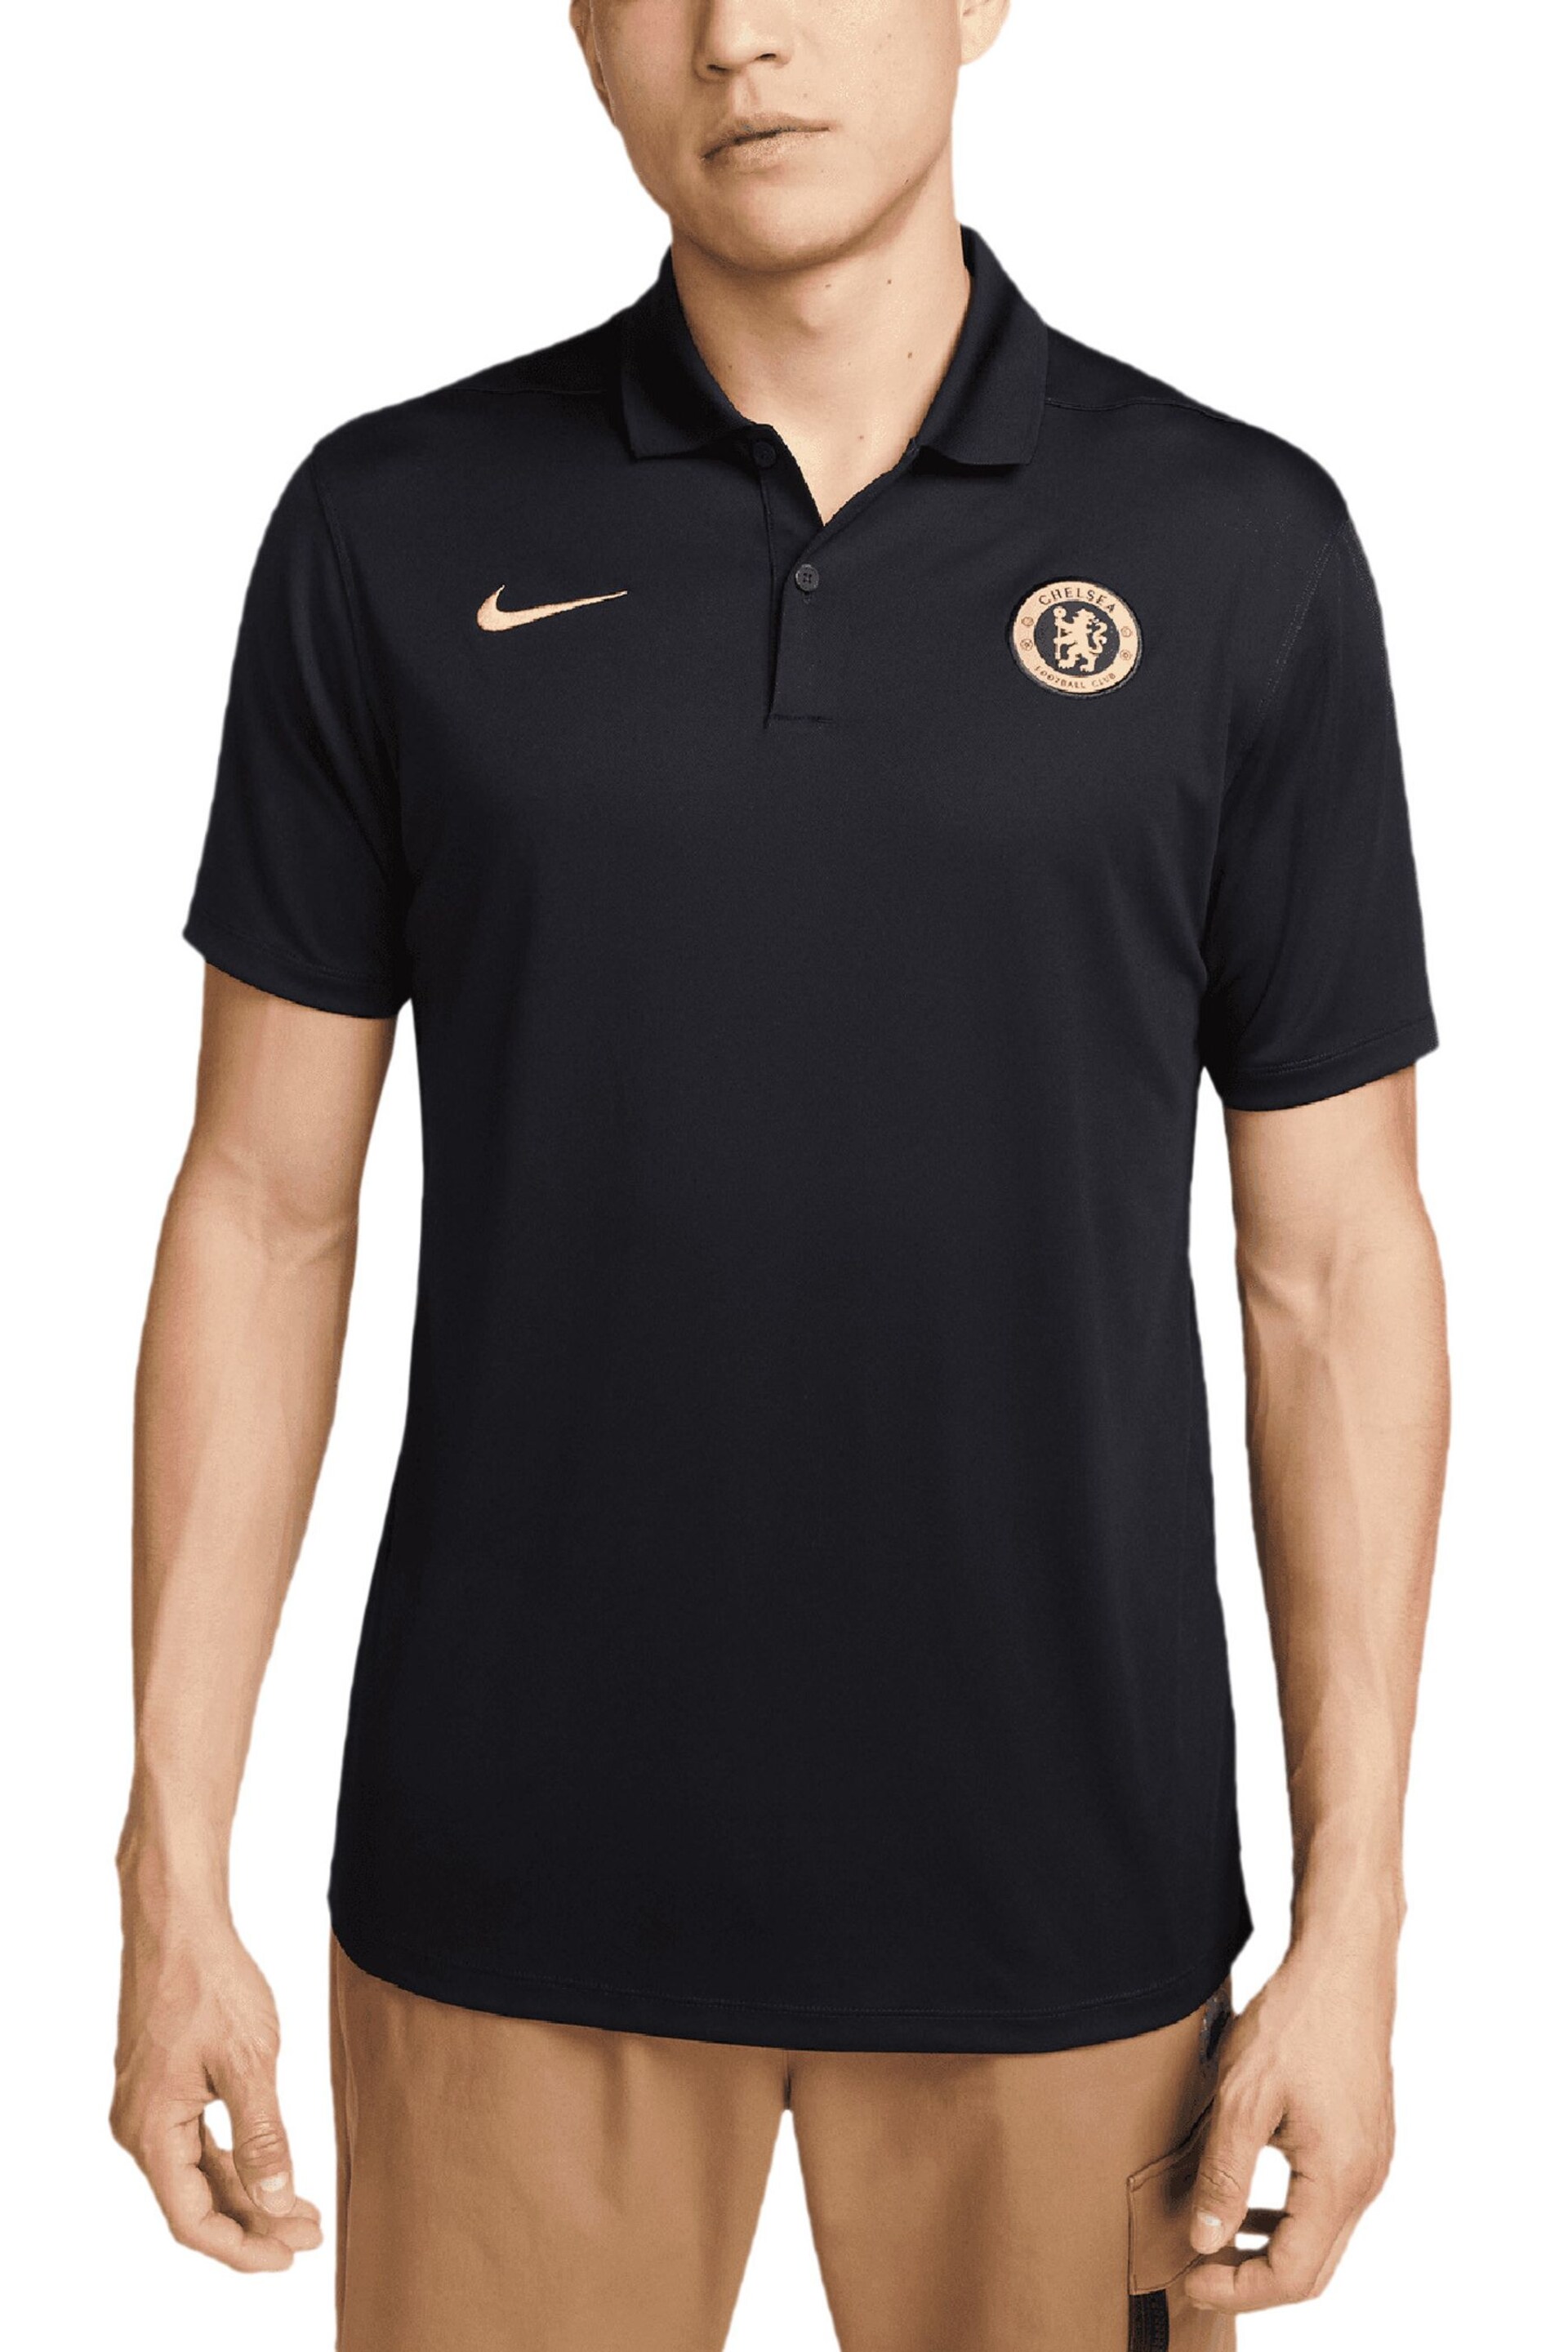 Nike Black Chelsea Victory Polo Shirt - Image 1 of 2